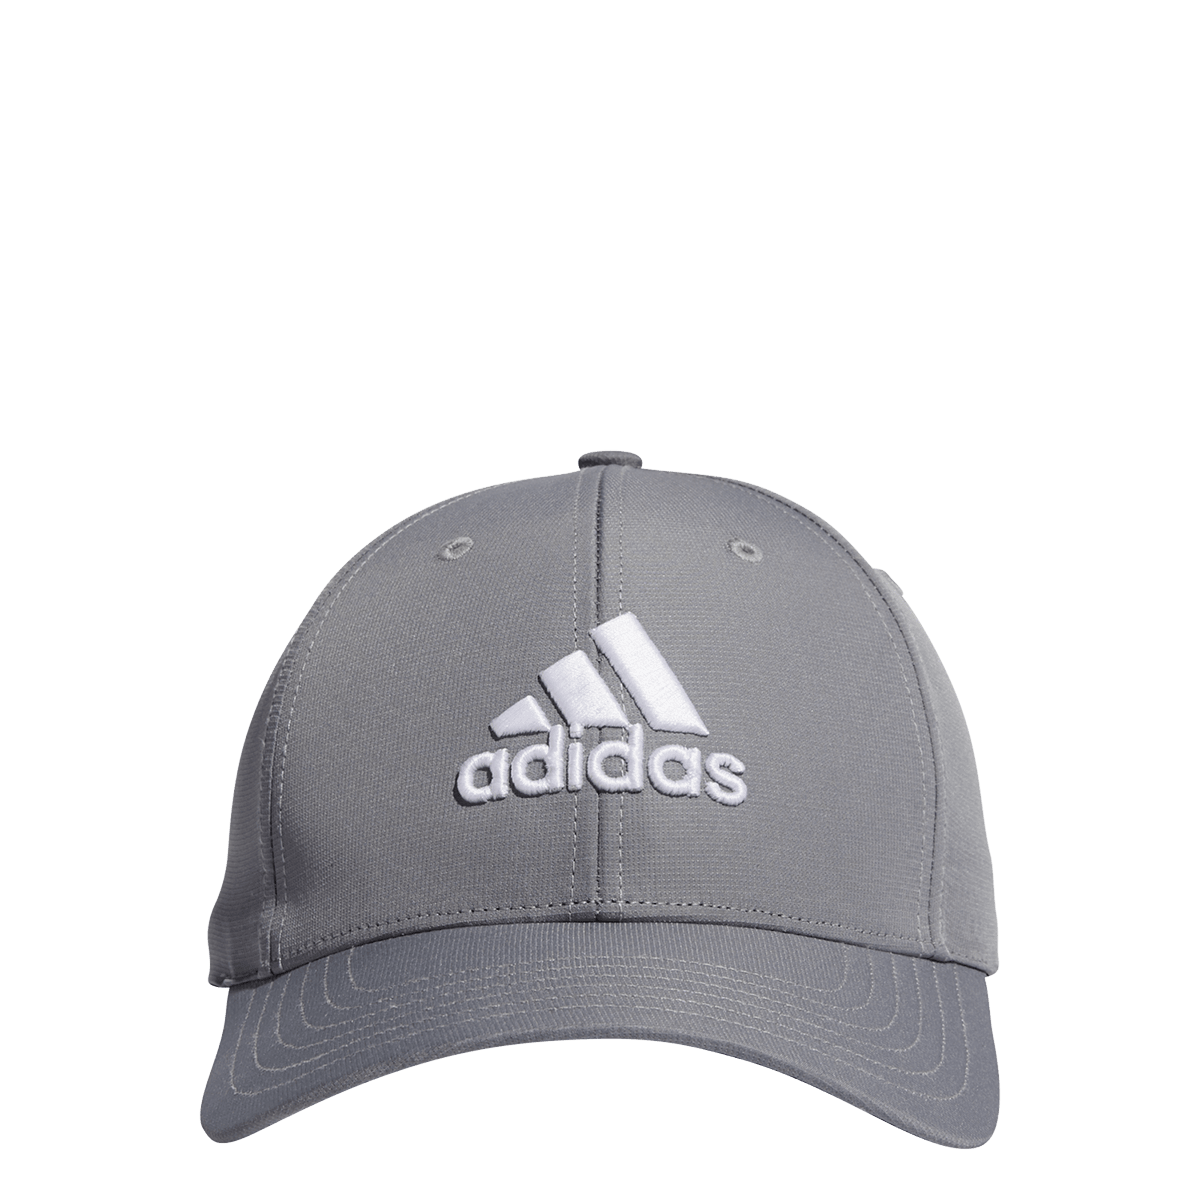 adidas Performance Hat | PGA TOUR Superstore